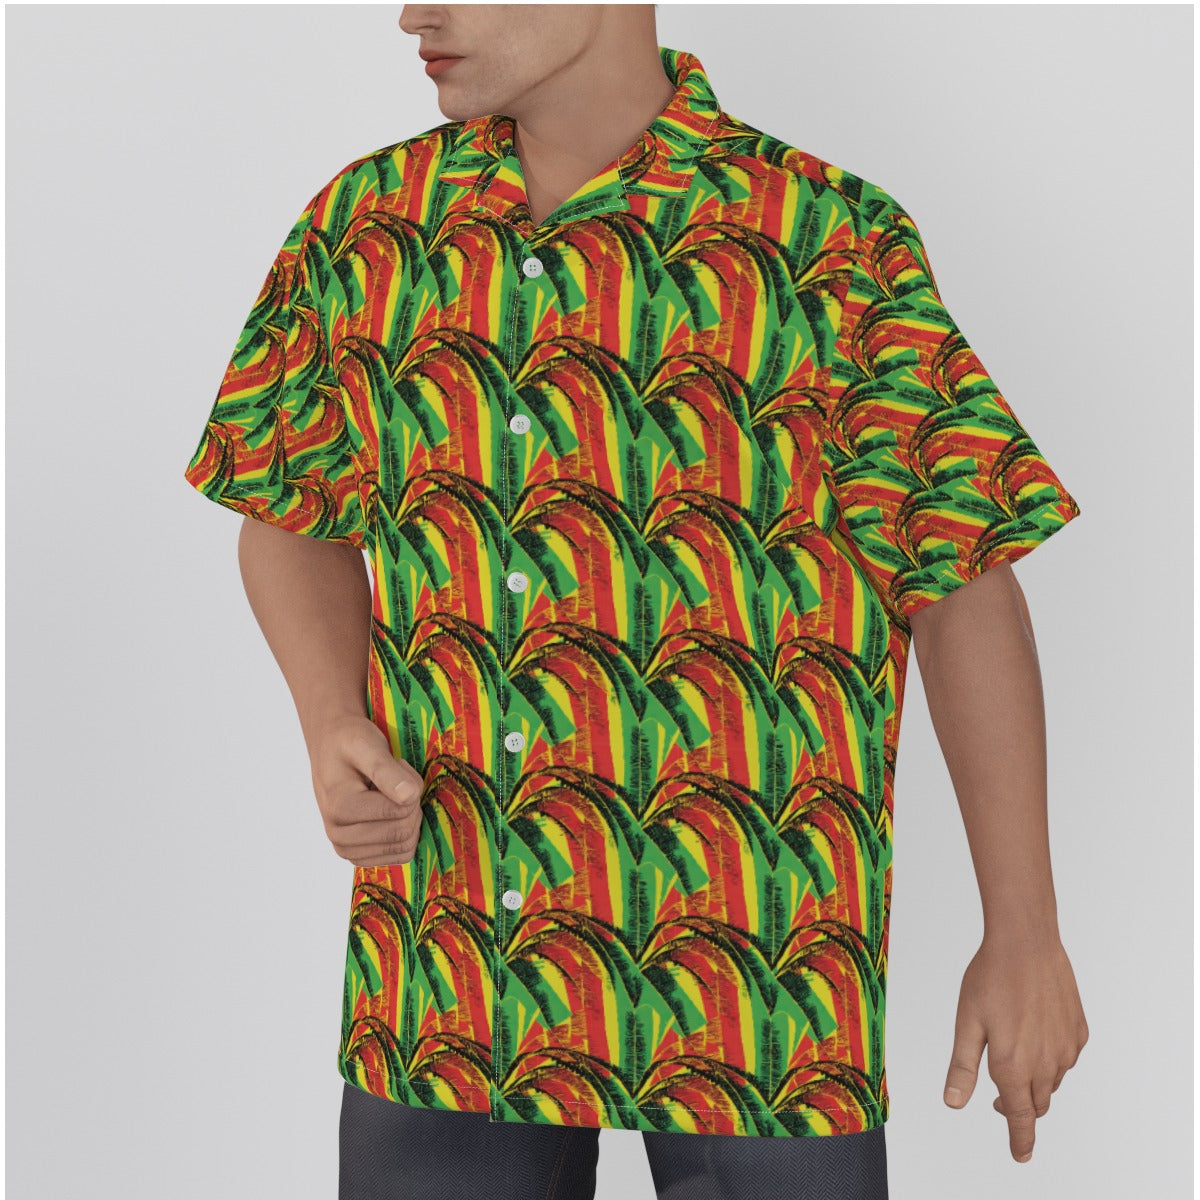 Rasta Resort Wear Men's Hawaiian Shirt, Resort Wear, Cruise Attire, Summer Essential Shirt